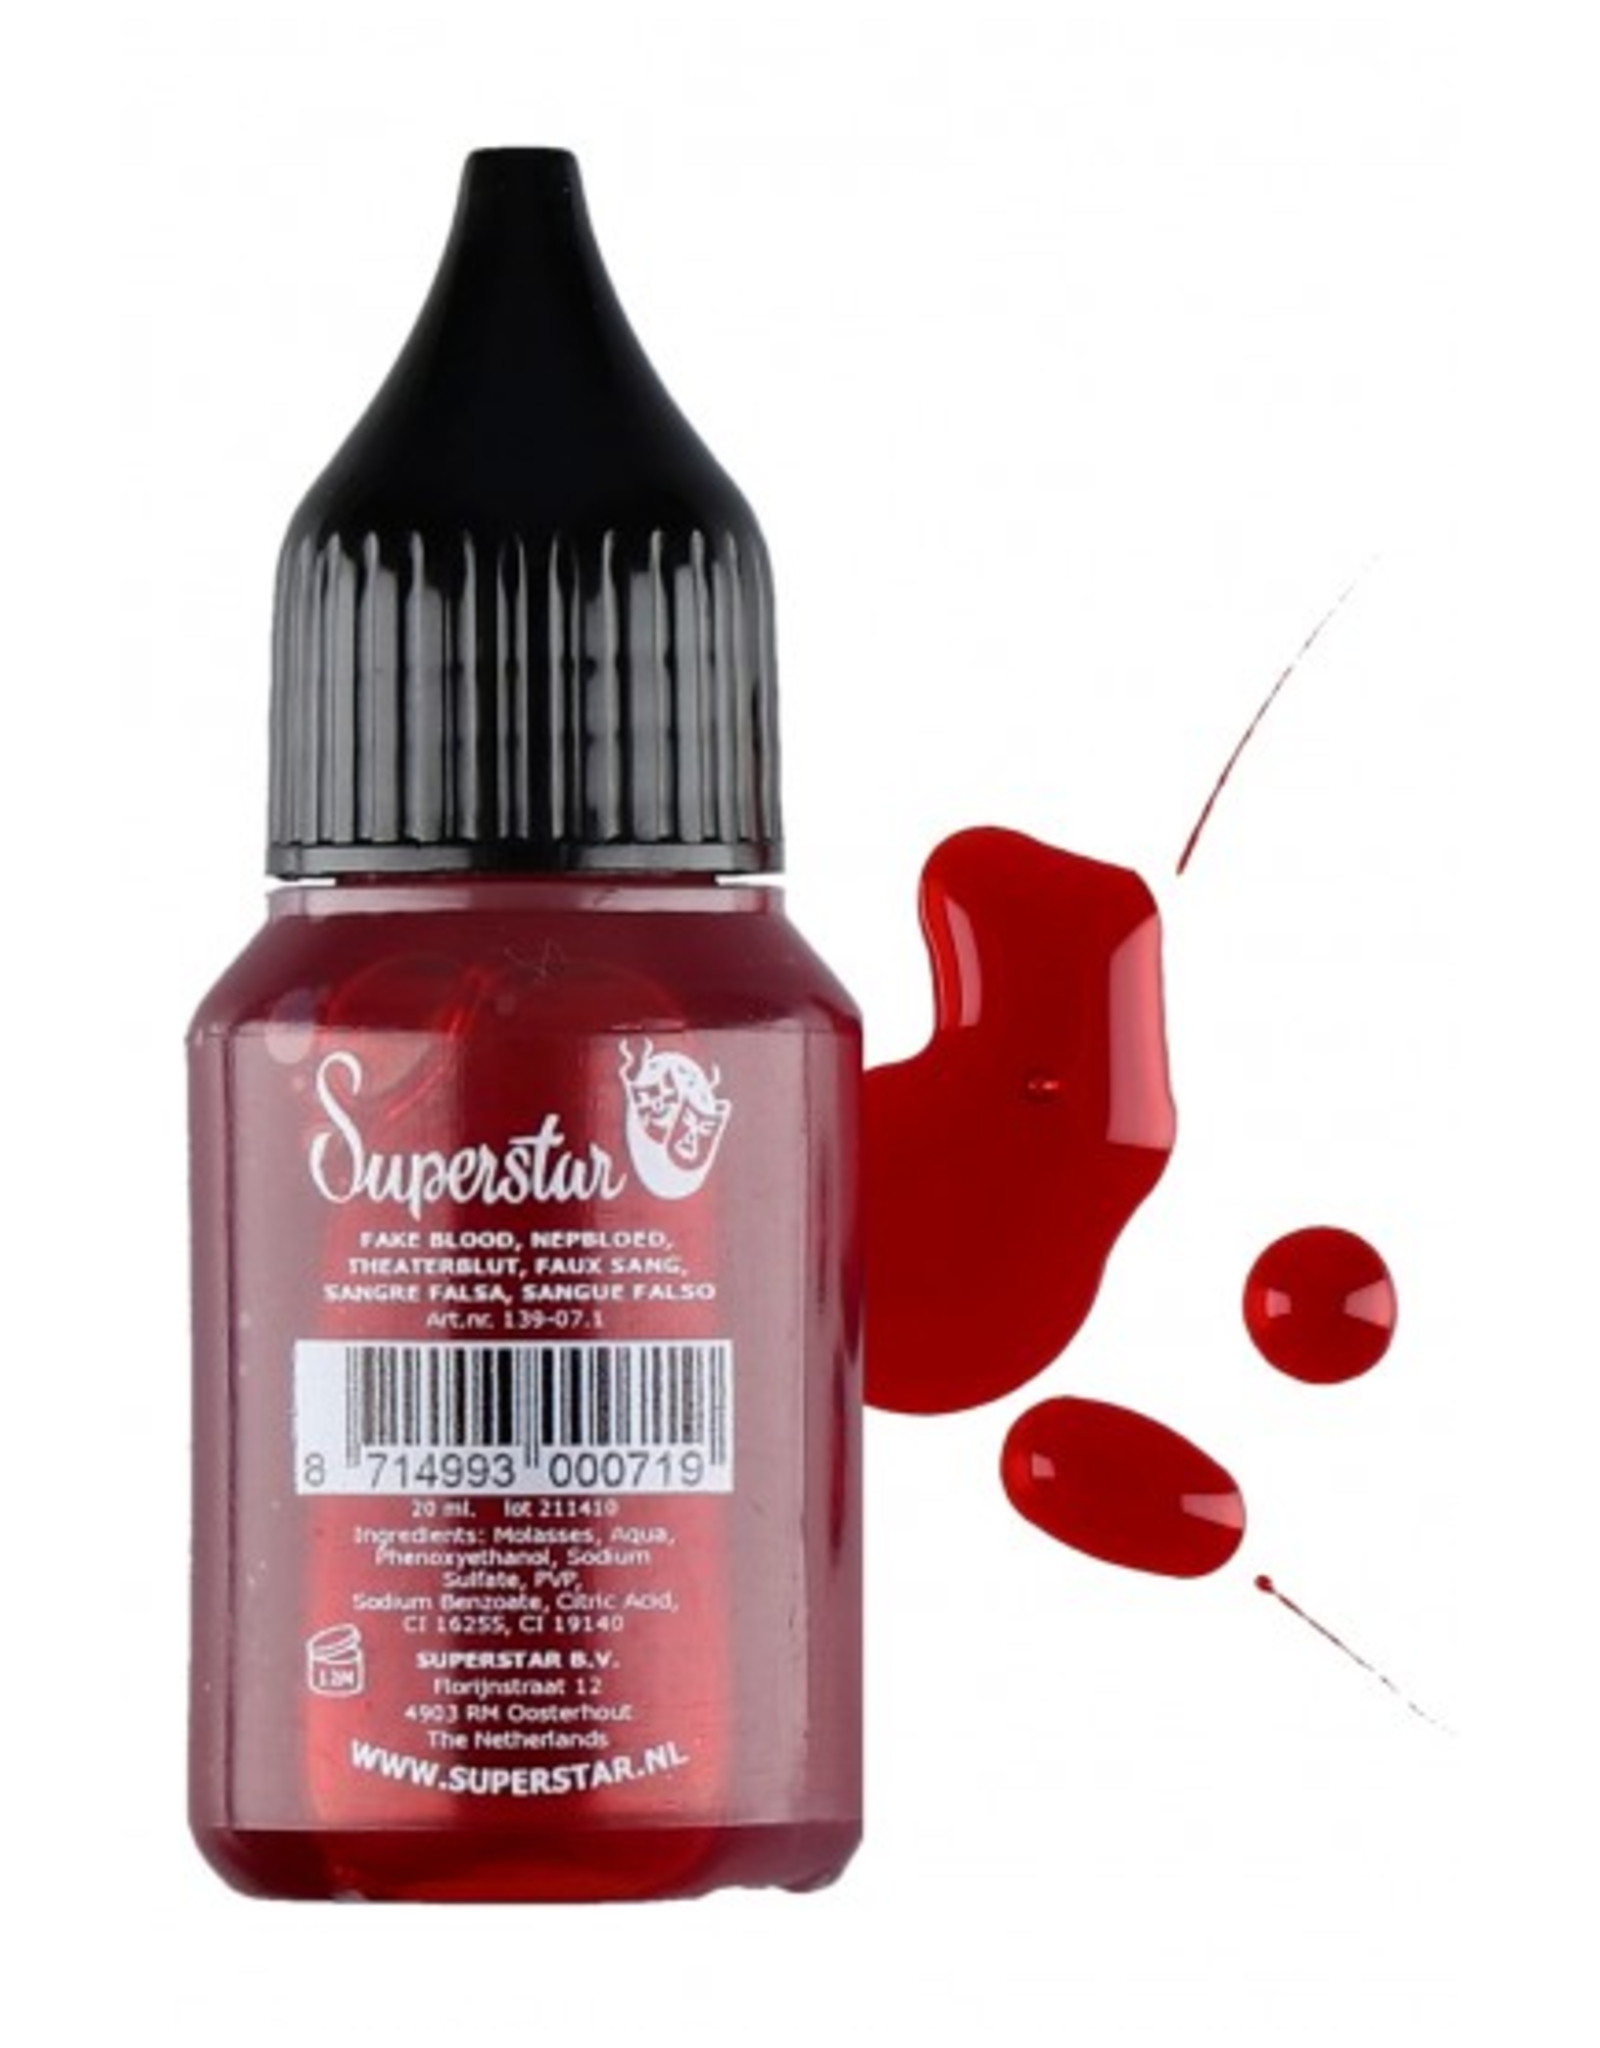 Superstar Superstar Artificial Blood/kunstbloed 20ml - Kunstbloed hel rood dik stollend 20 ml